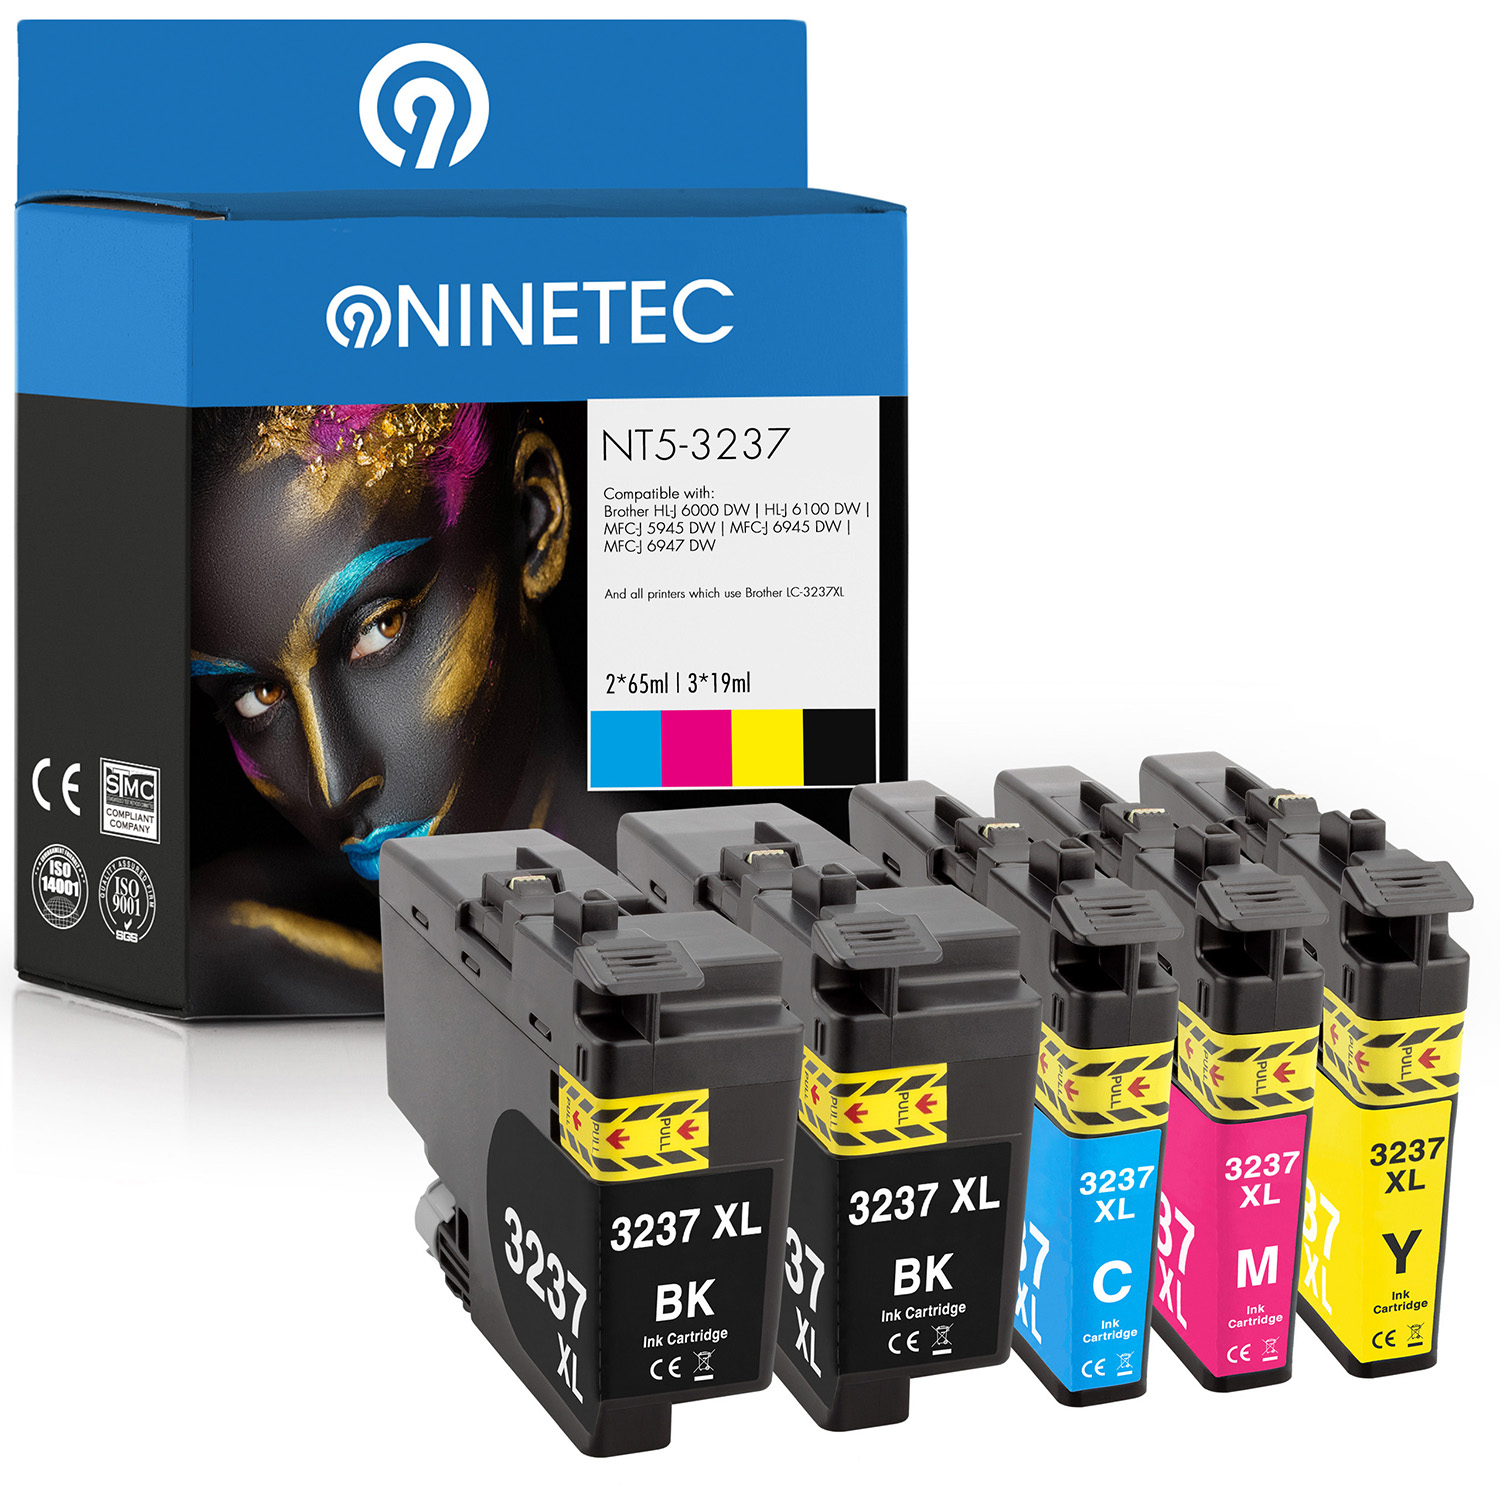 NINETEC 5er Set ersetzt magenta,yellow LC-3237 LC-3237 LC-3237 Tintenpatronen BK, C, (LC-3237 cyan, black, M, LC-3237 Y) Brother